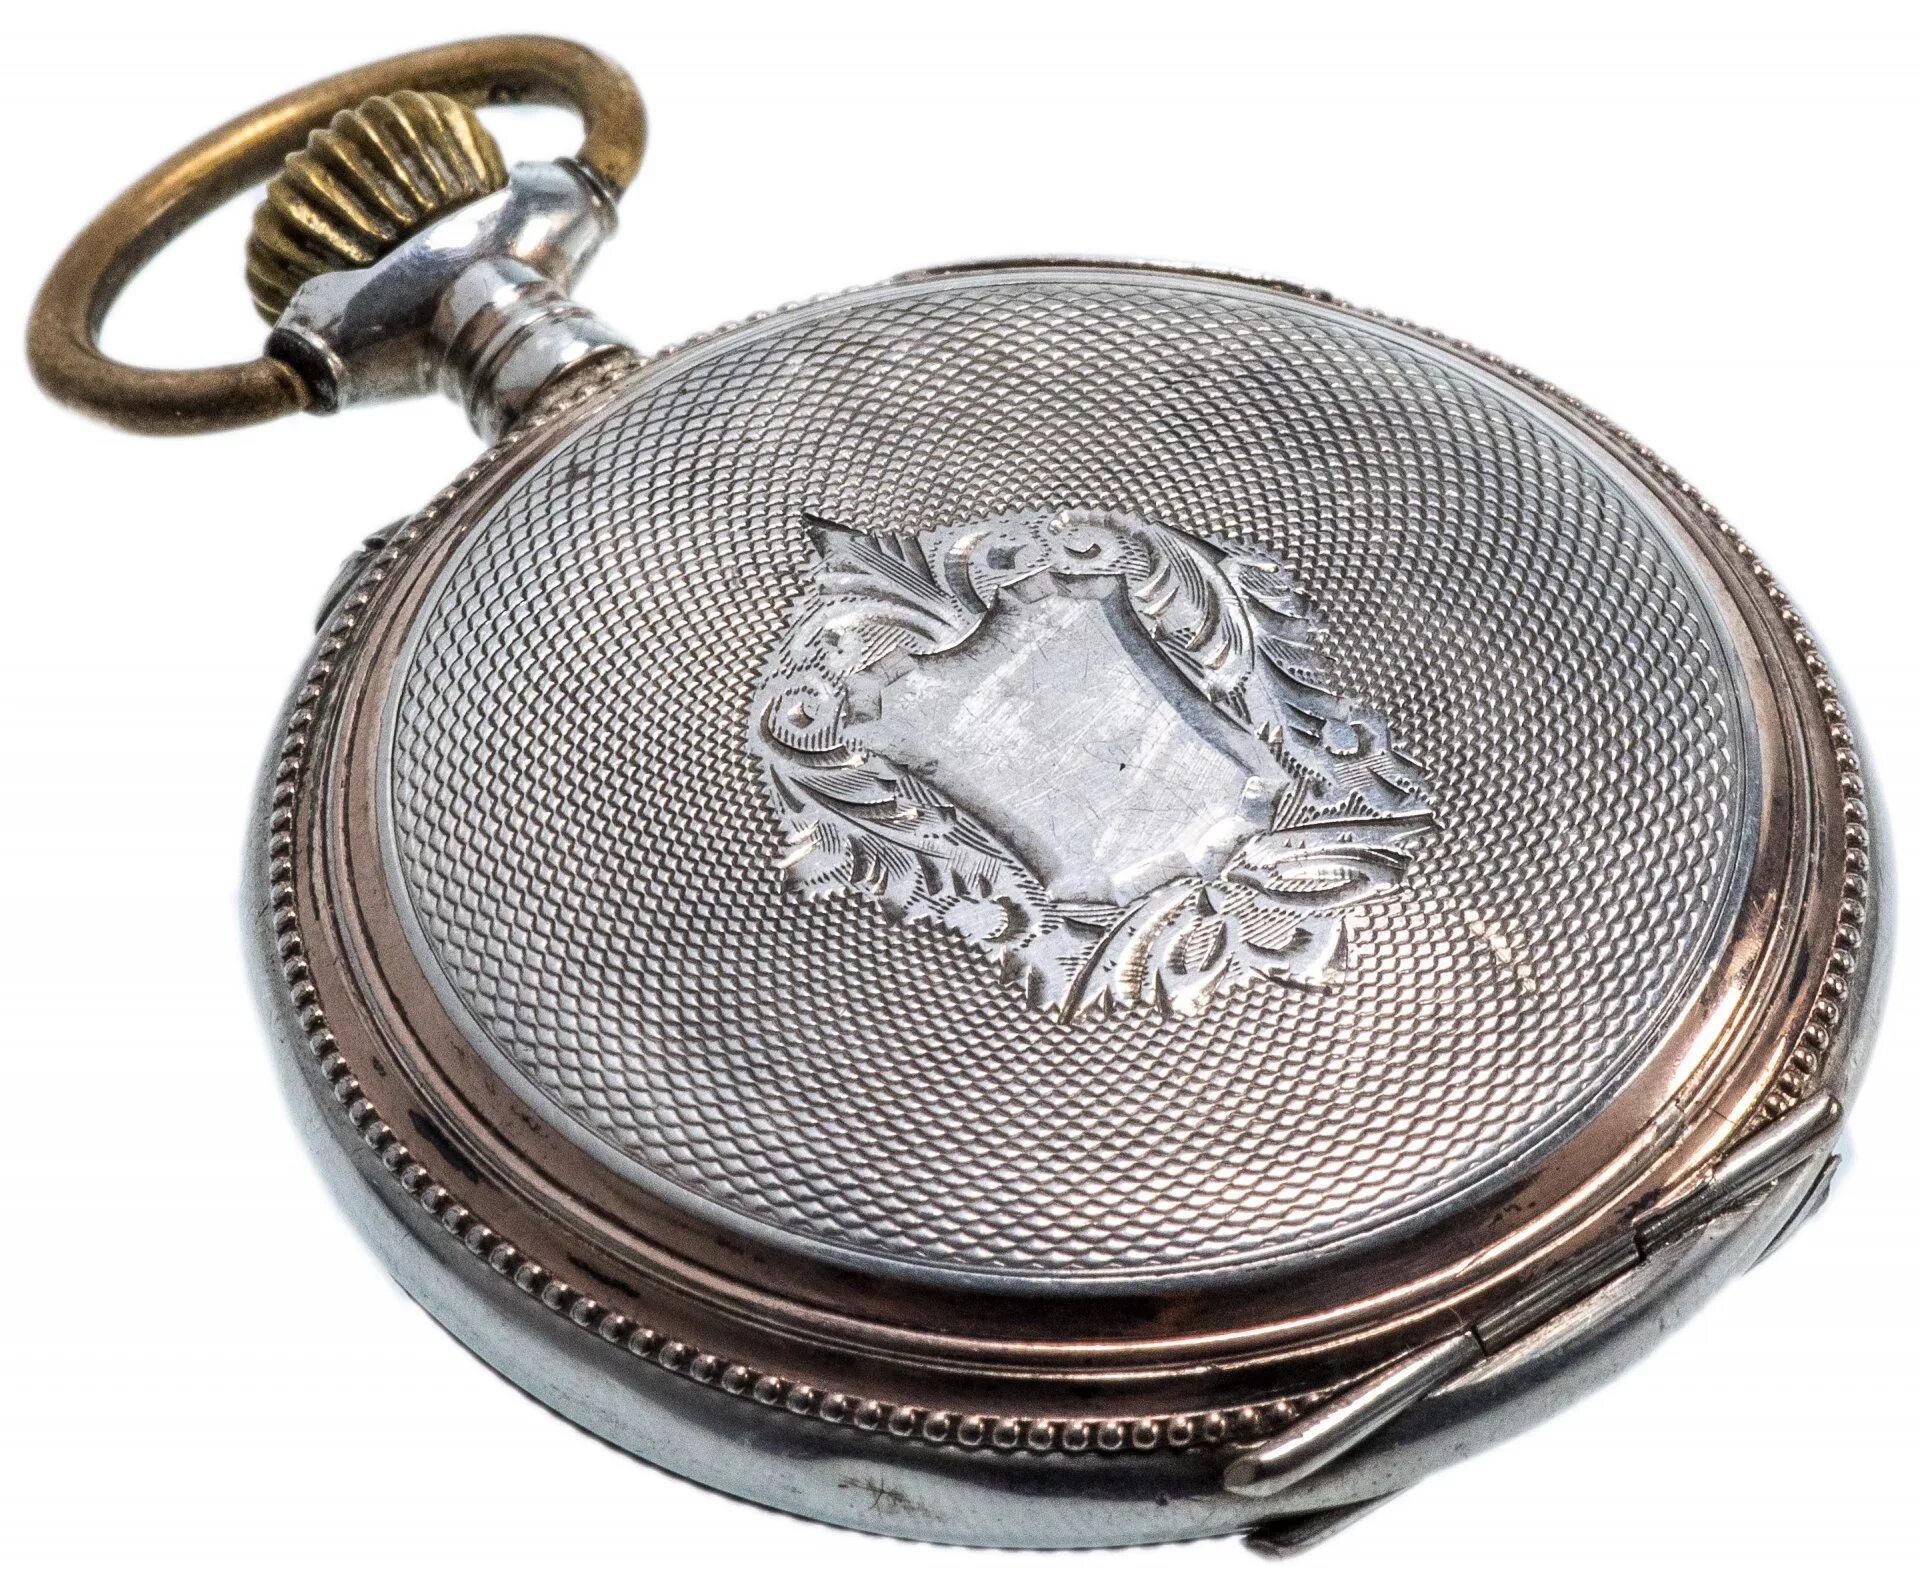 Швейцарские карманные часы. Карманные часы Galonne Швейцария. Часы карманные швейцарские Galonne серебро 0.800 проба. Часы Galonne карманные серебряные. Часы карманные Bellaria серебряные.